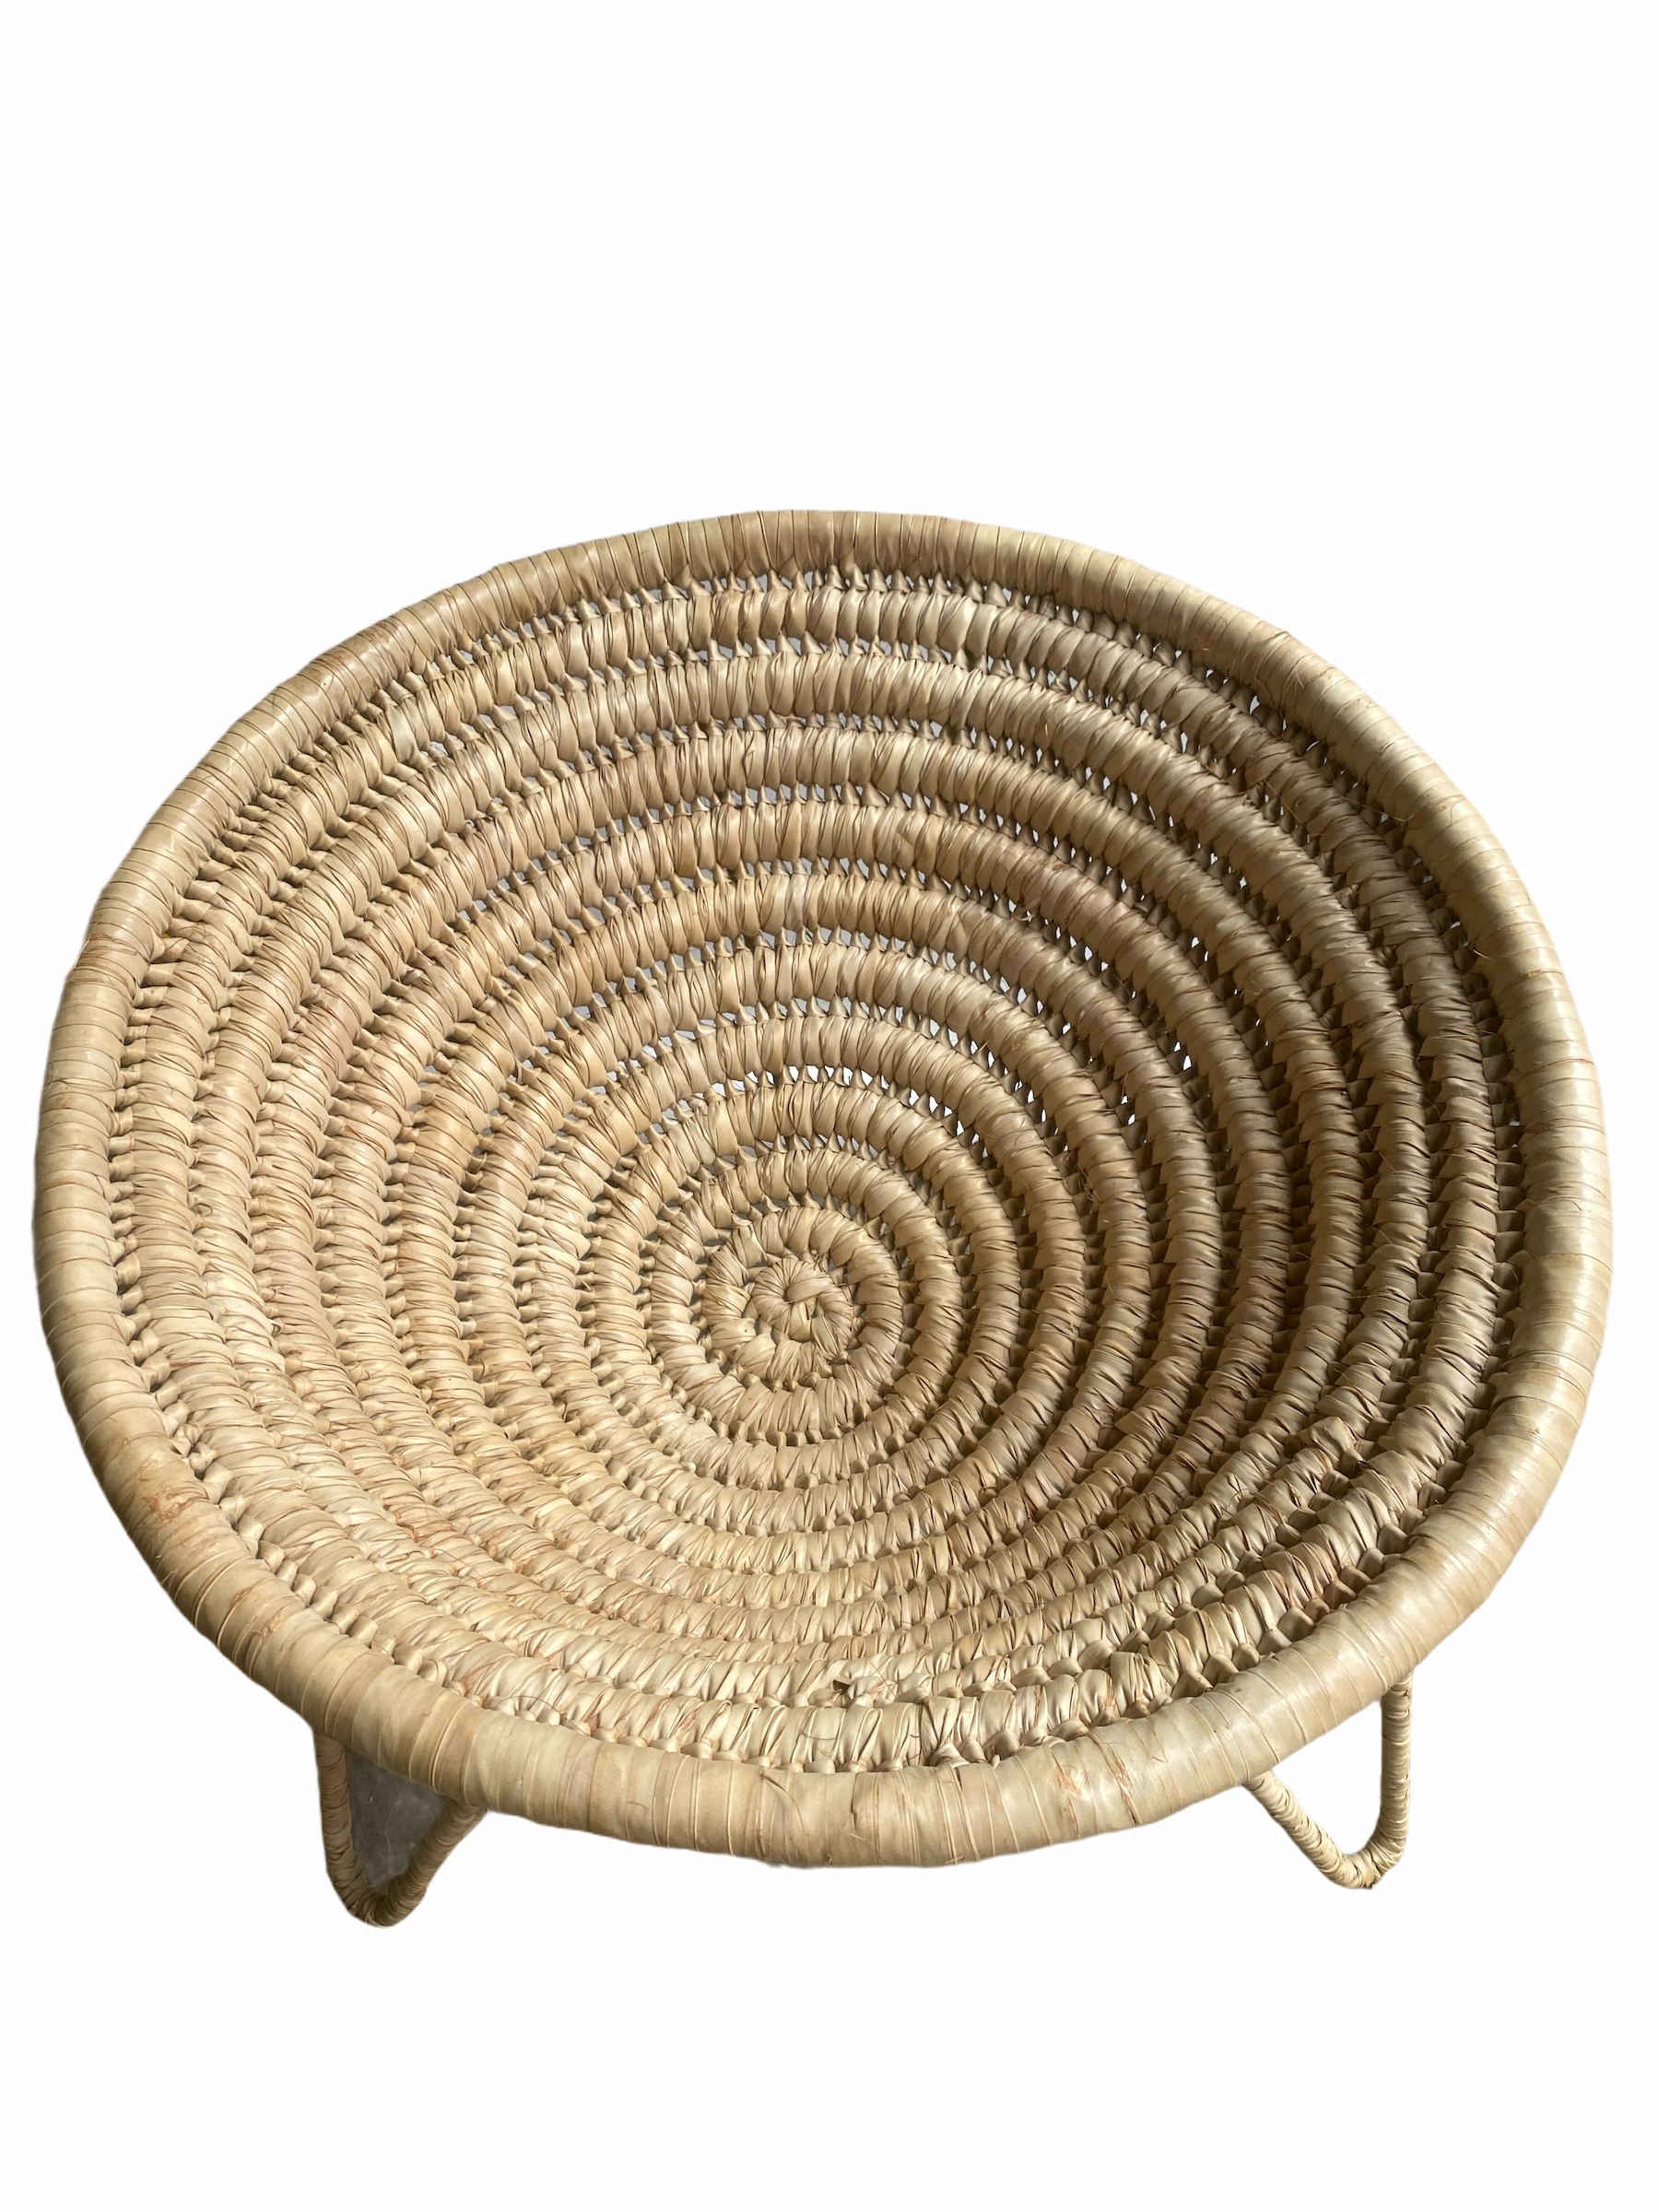 Handwoven Cone Chair - Mozambique